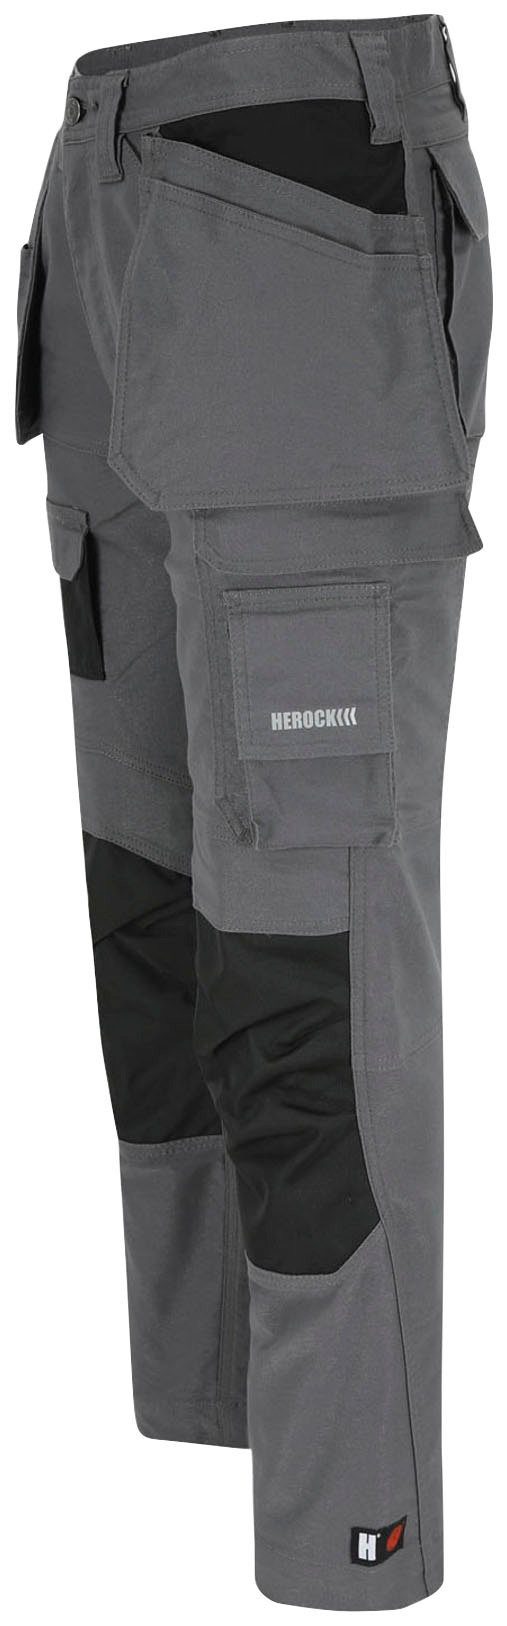 Nageltaschen robust, Herock sehr grau feste (Coolmax® Arbeitshose Technologie) Multi-pocket, HEROCLES Stretch,